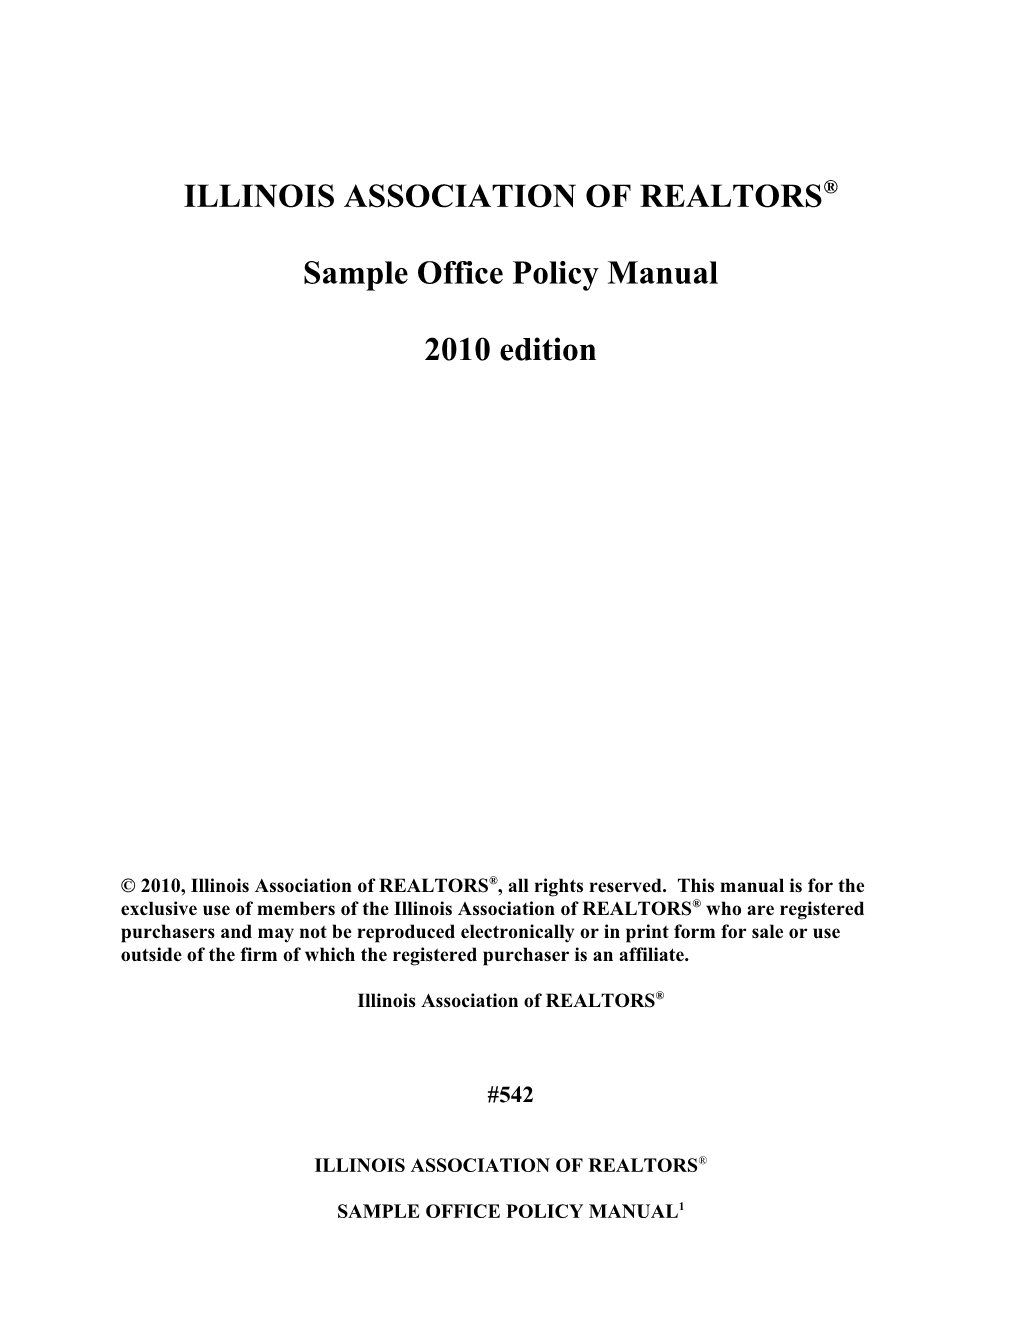 Illinois Association of Realtors